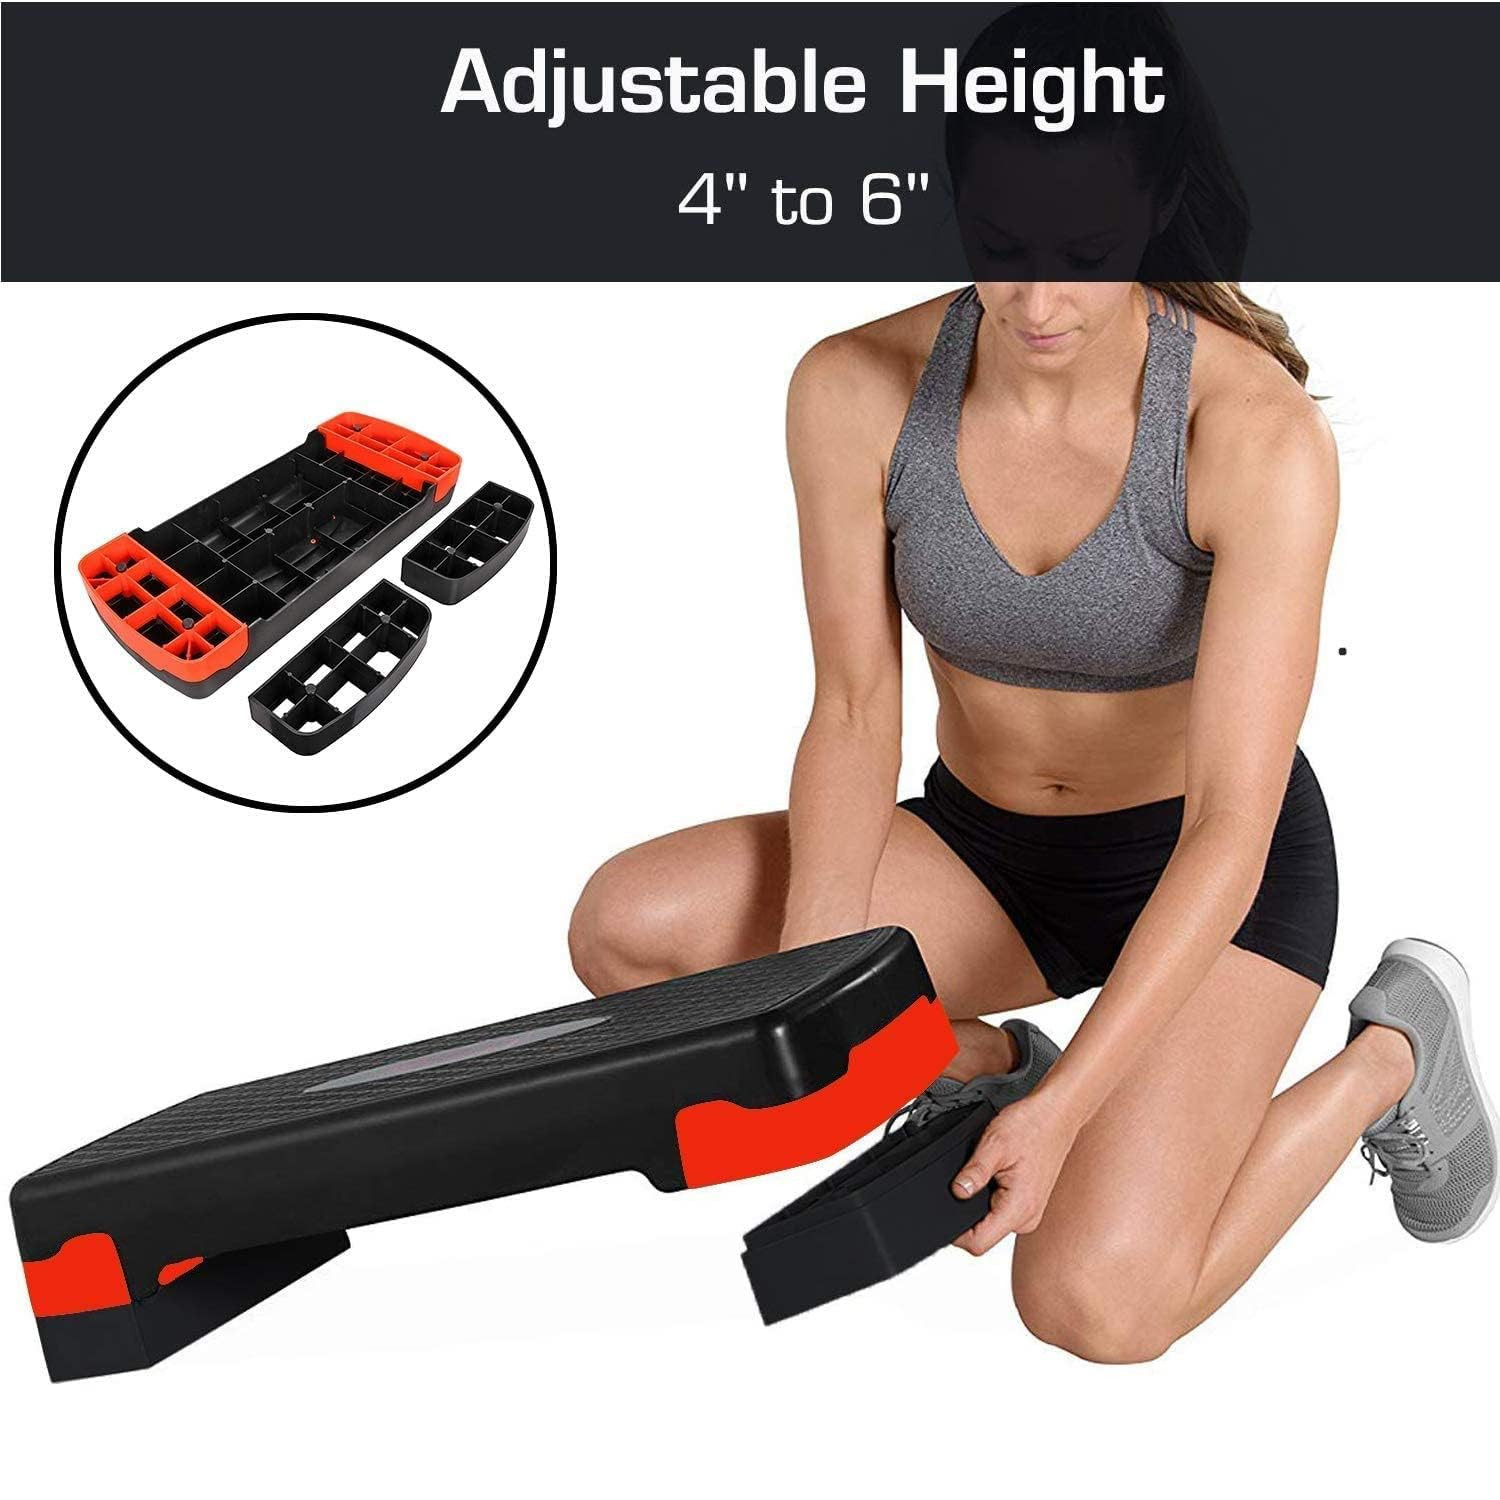 Kuber Industries Adjustable Aerobic Stepper For Gym, Yoga, Home (Black & Red)